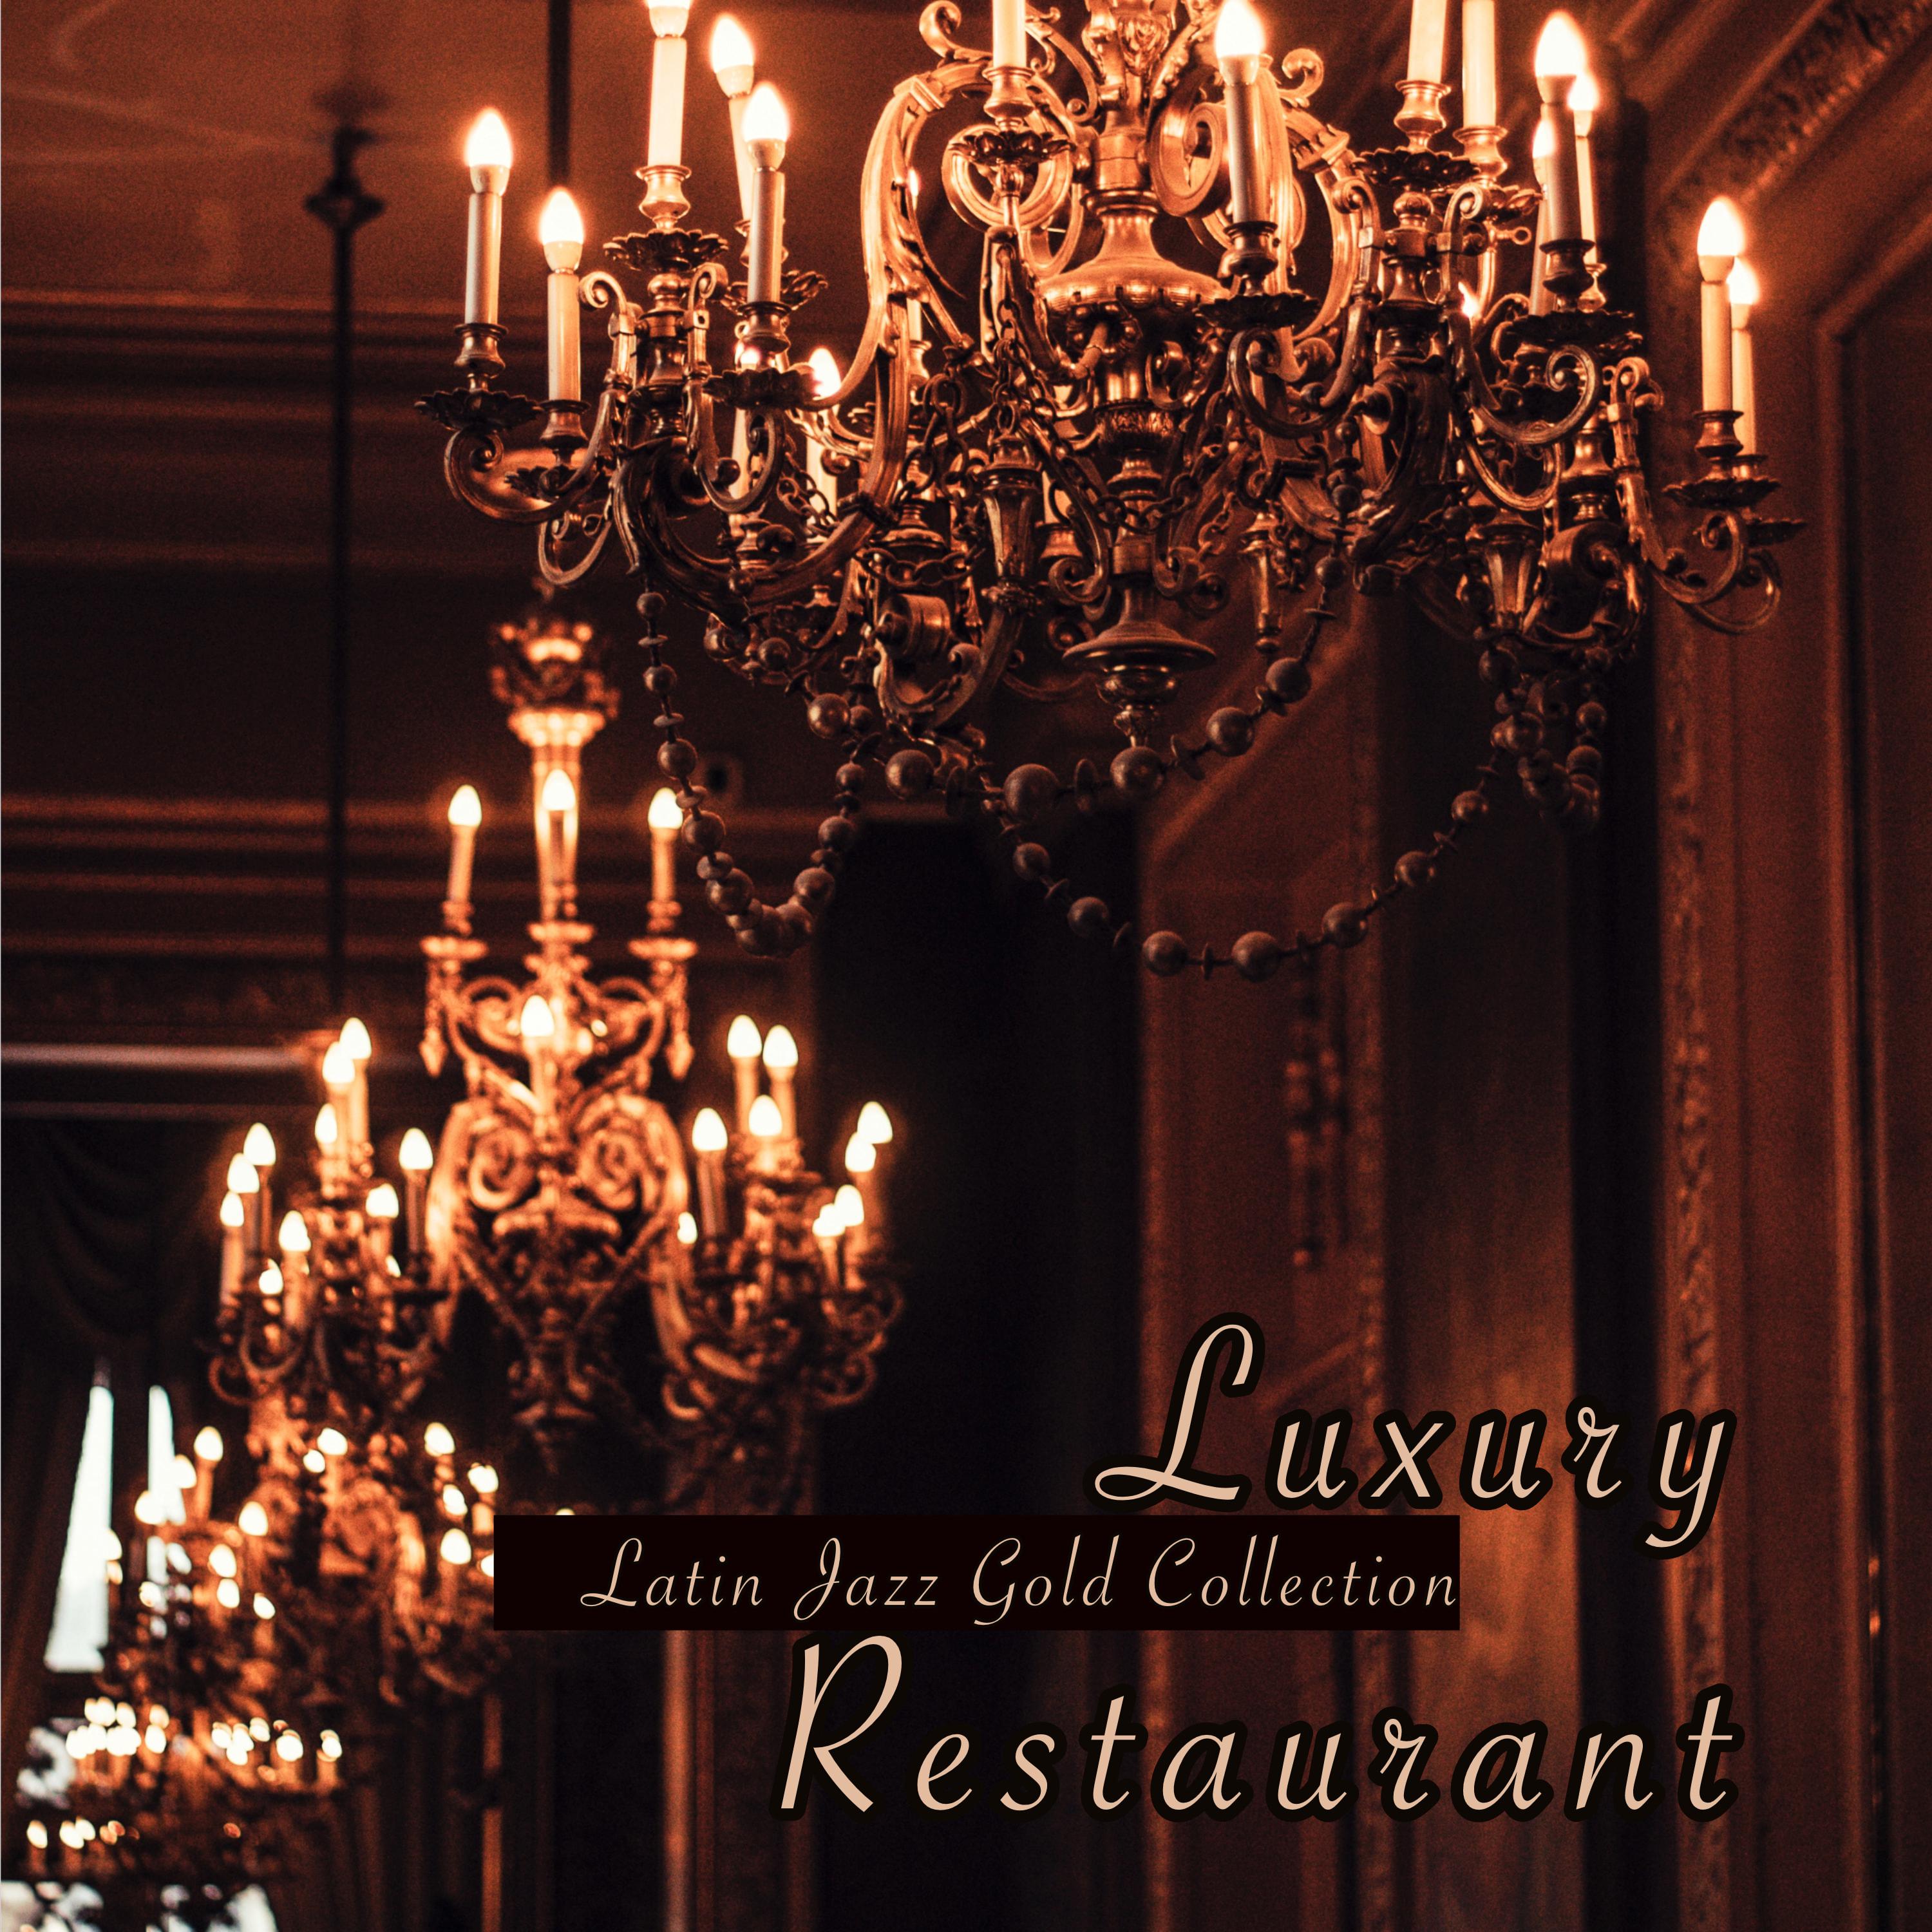 Luxury Restaurant Latin Jazz Gold Collection - Bossanova and Soft Jazz Instrumental Background Music for Dinner, Cocktails & Drinks